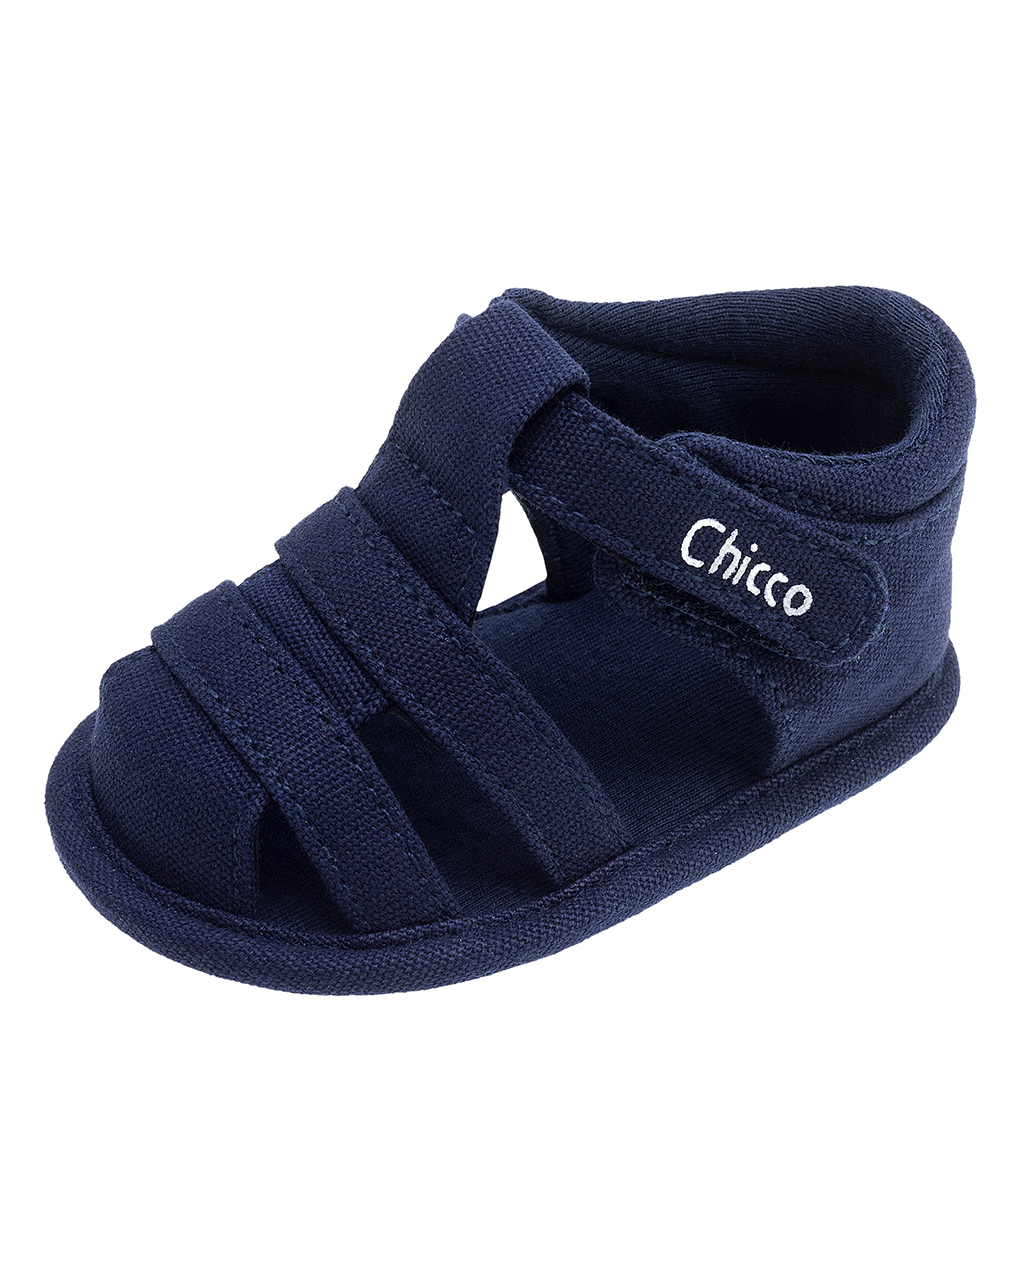 Sandalo owes blu - Chicco